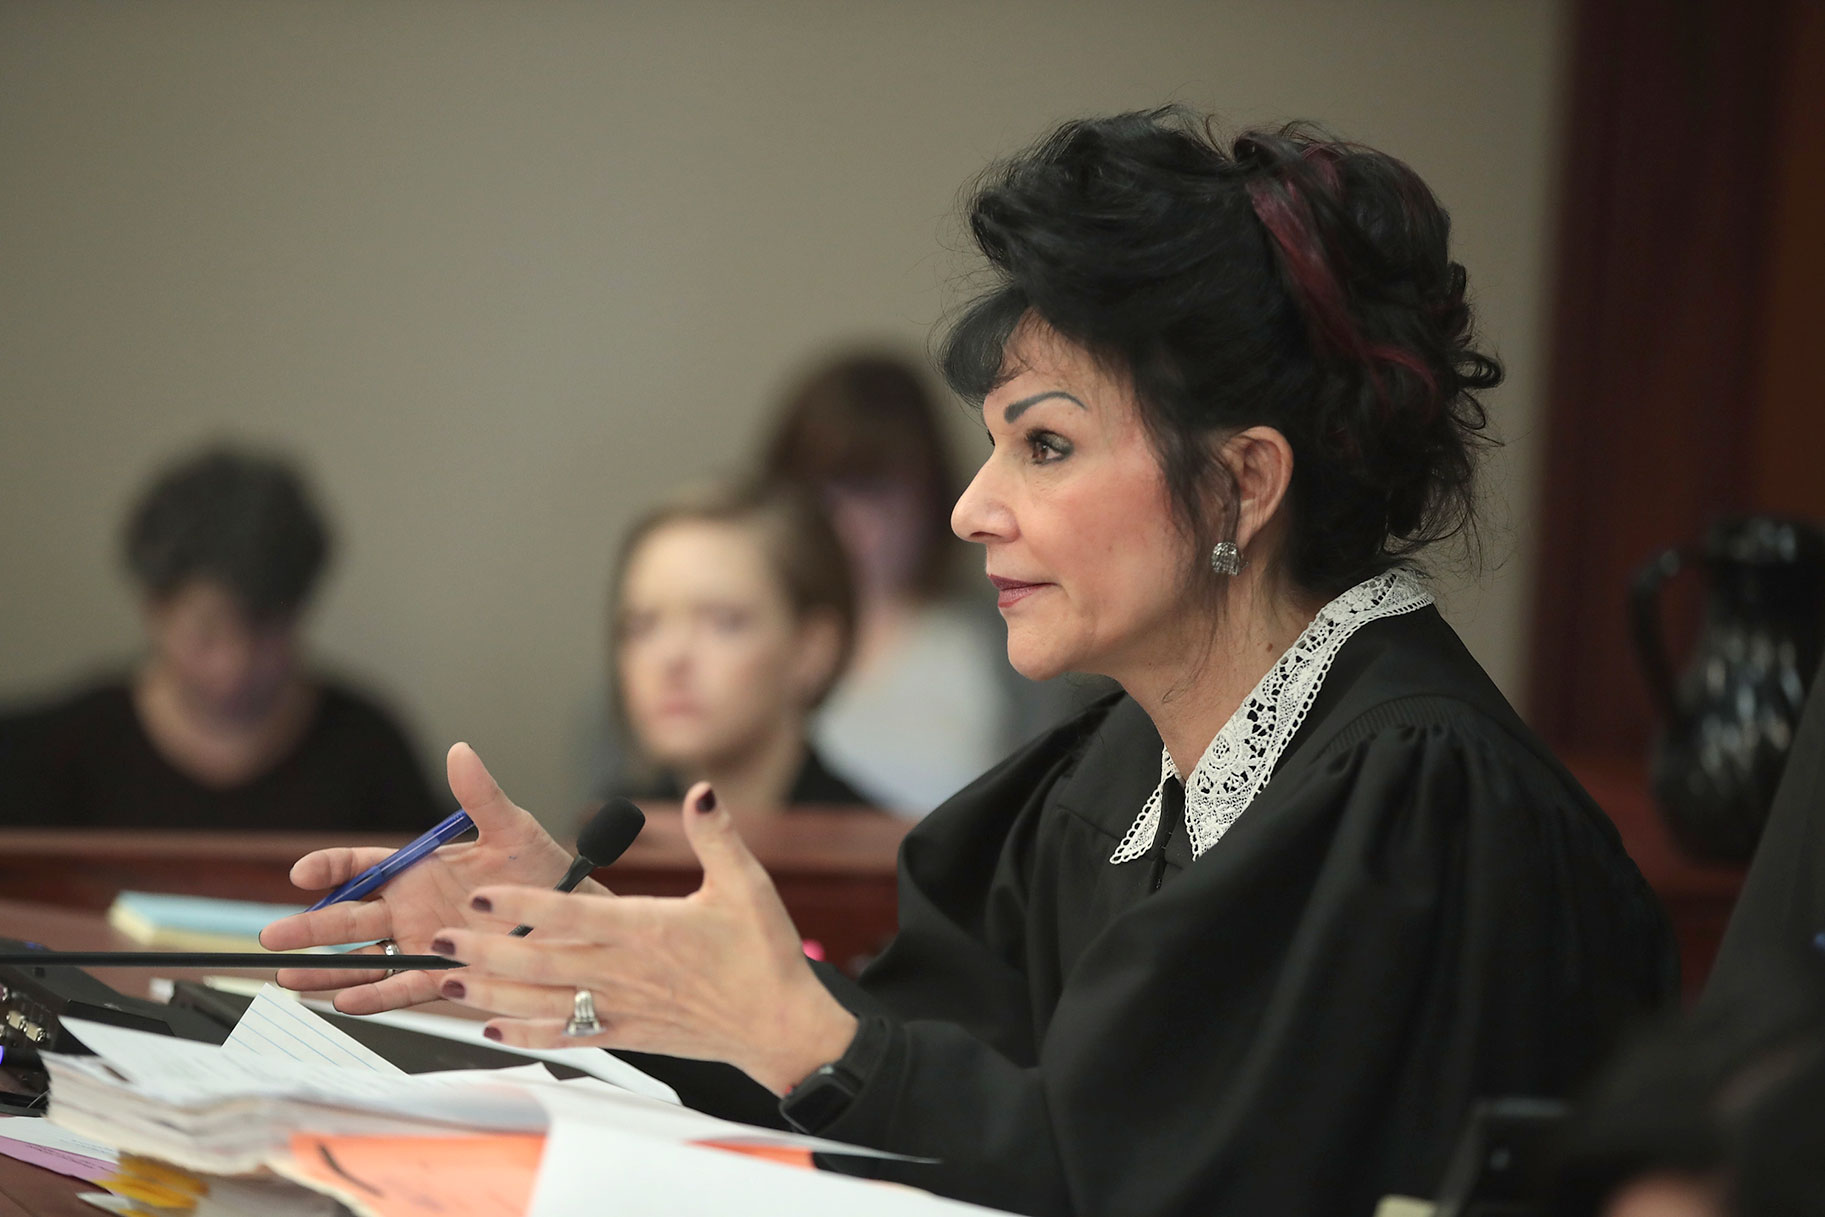 Judge Rosemarie Aquilina